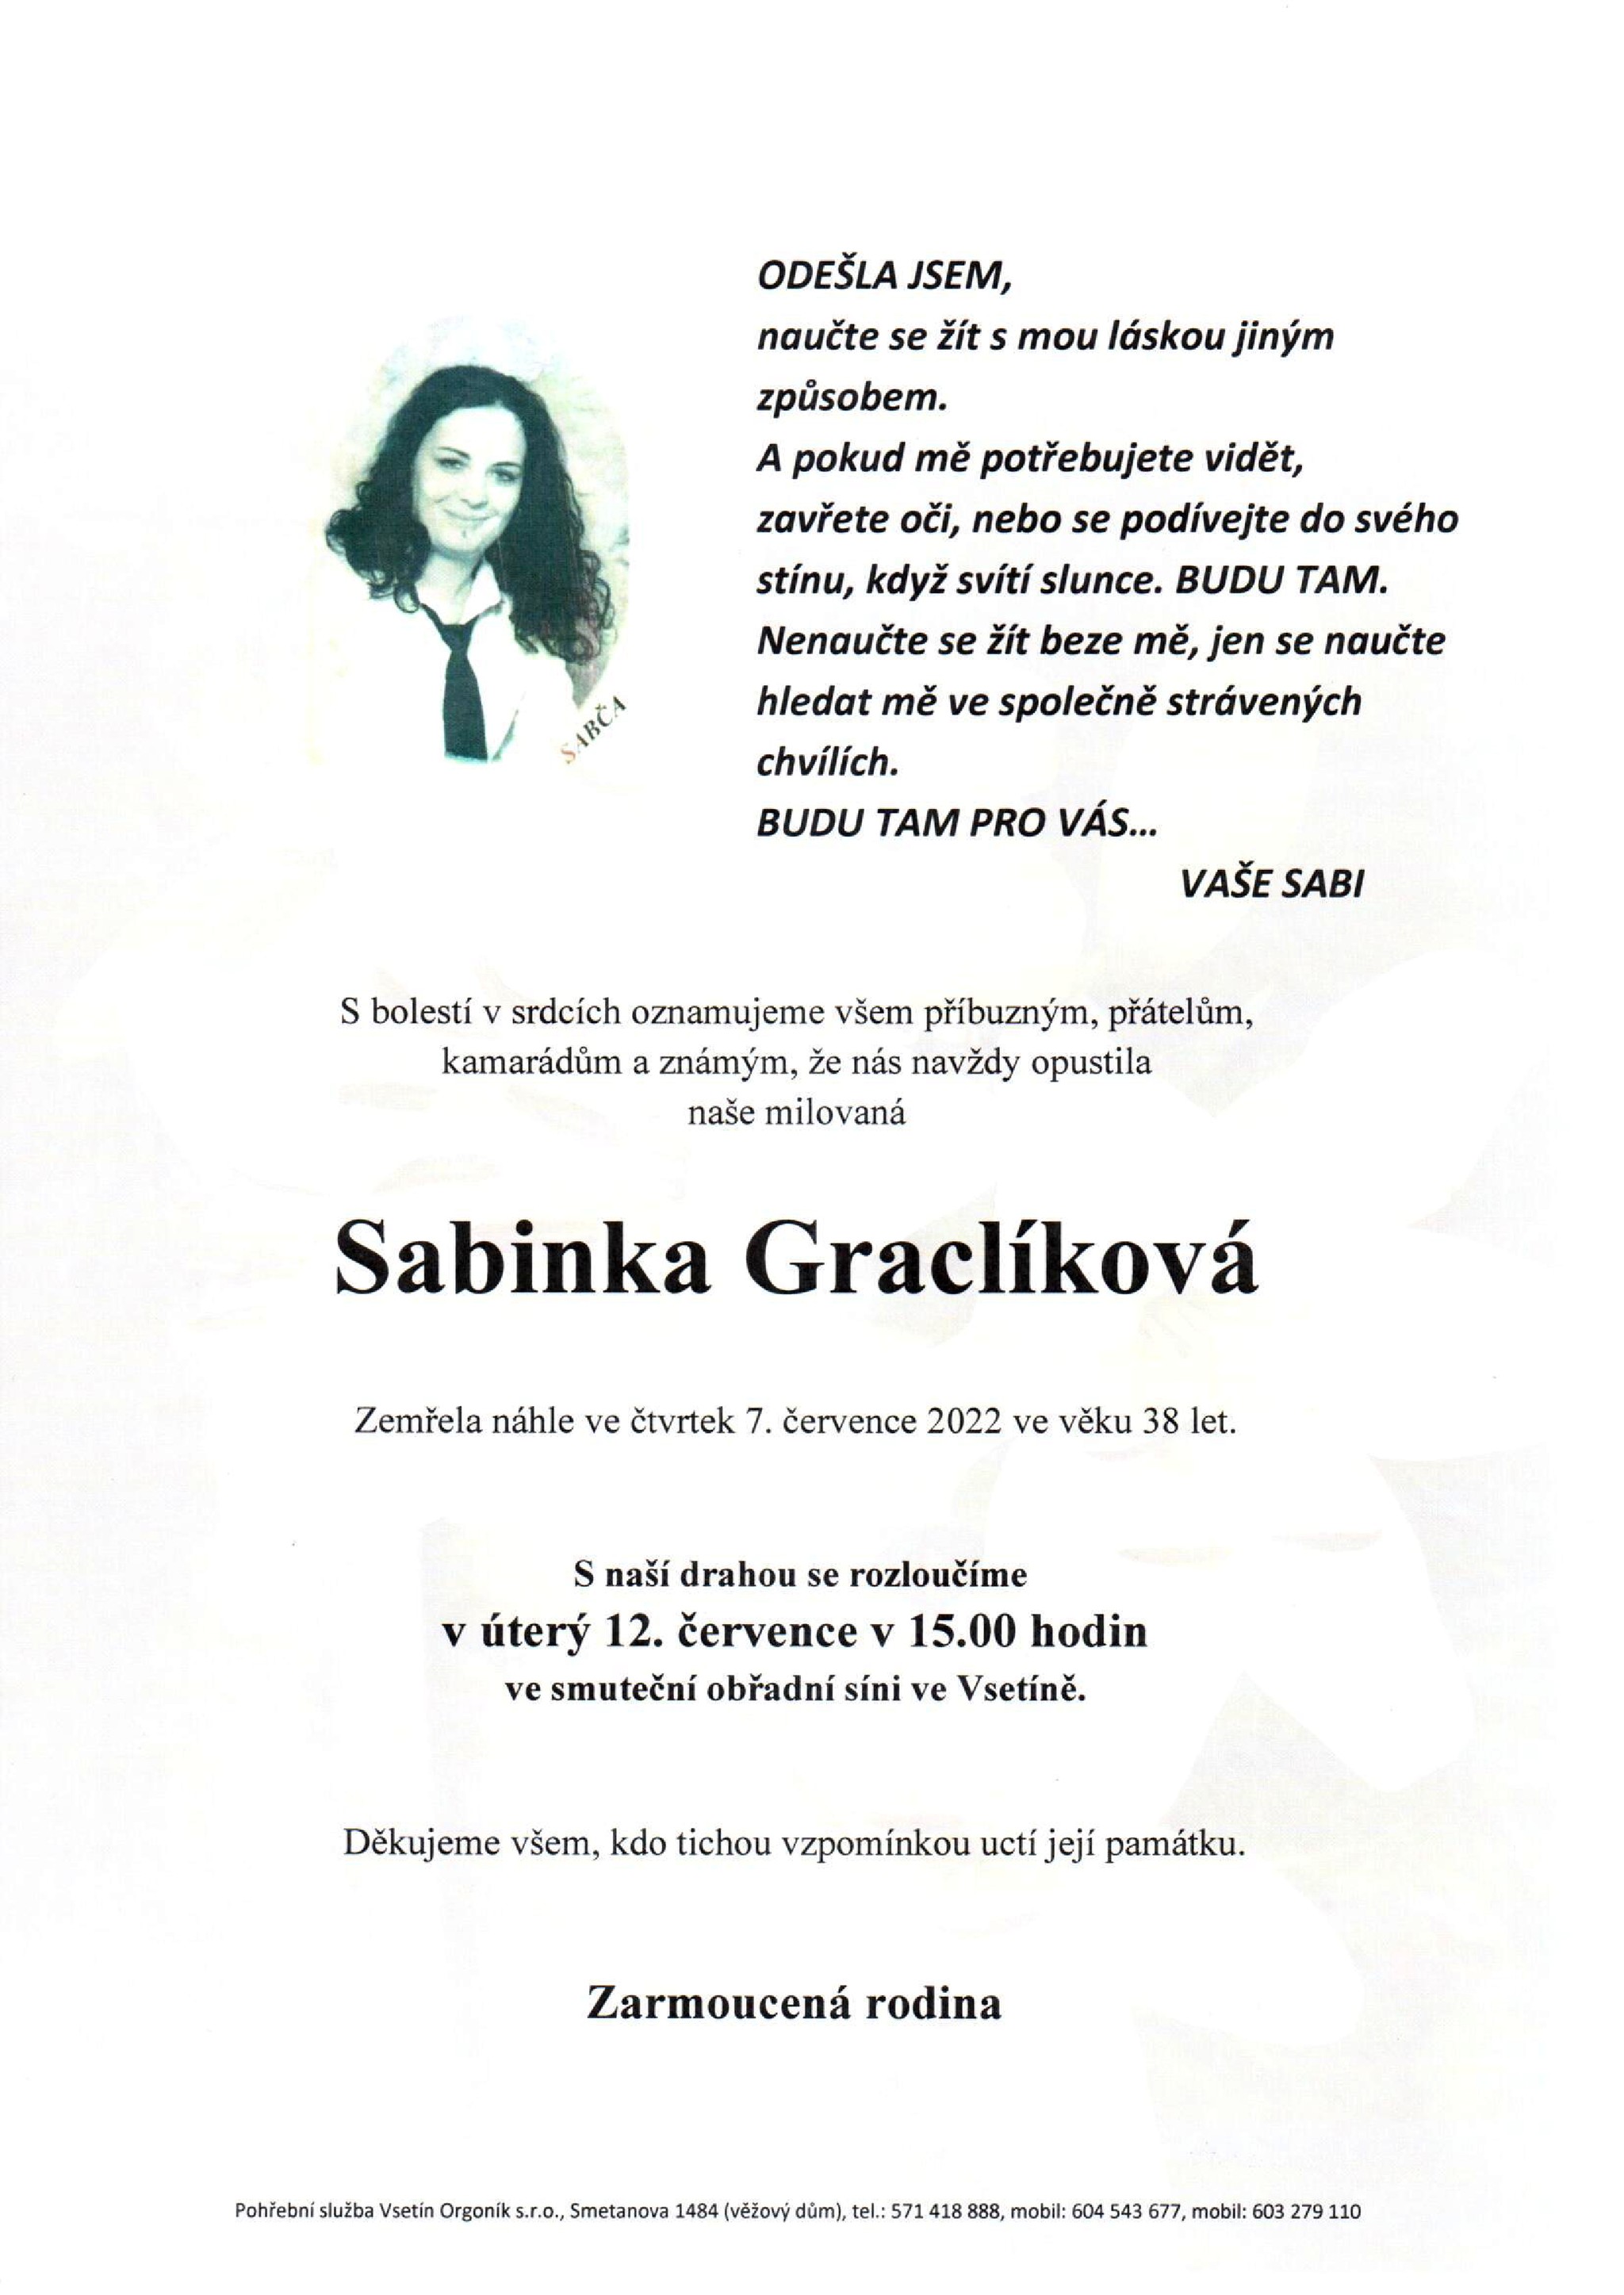 Sabinka Graclíková